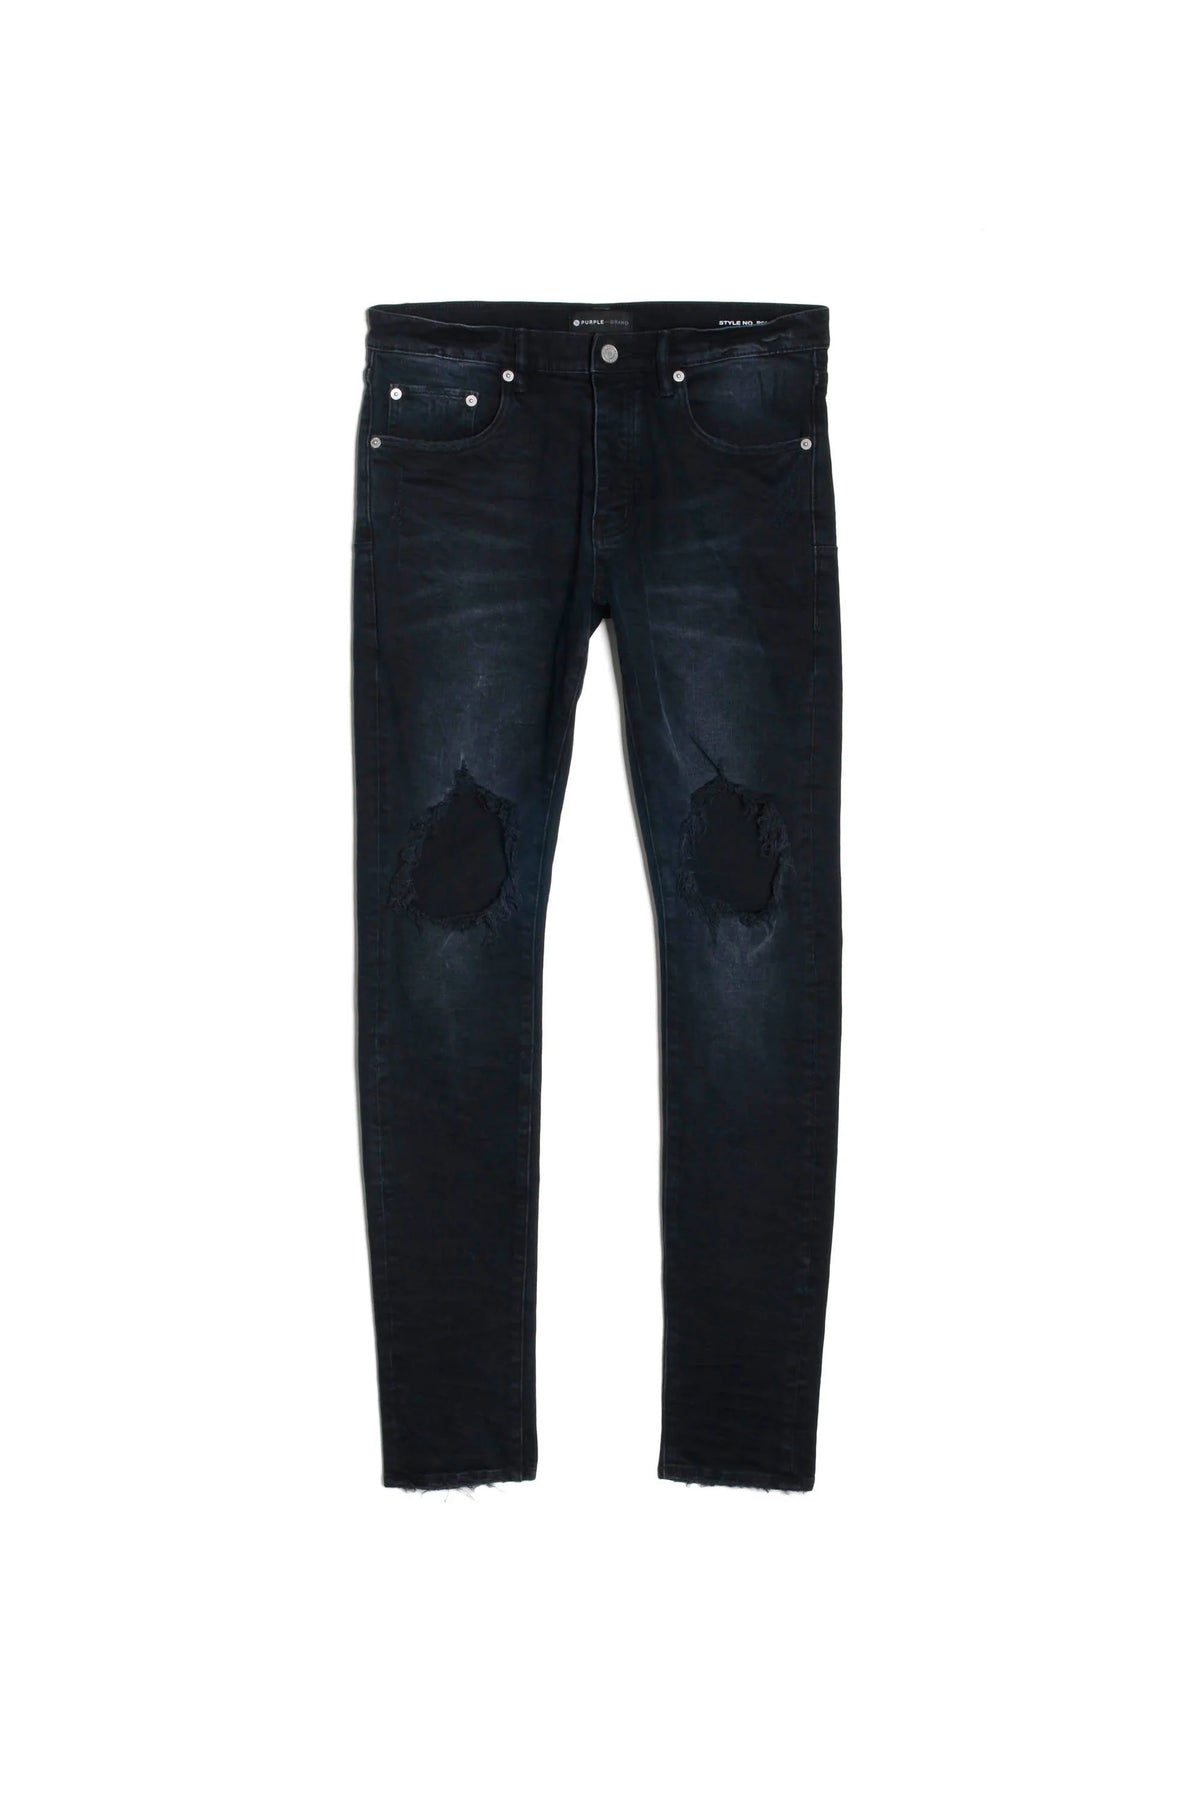 Purple Brand P001 3 Needle Black Wash Repair Flare Jeans